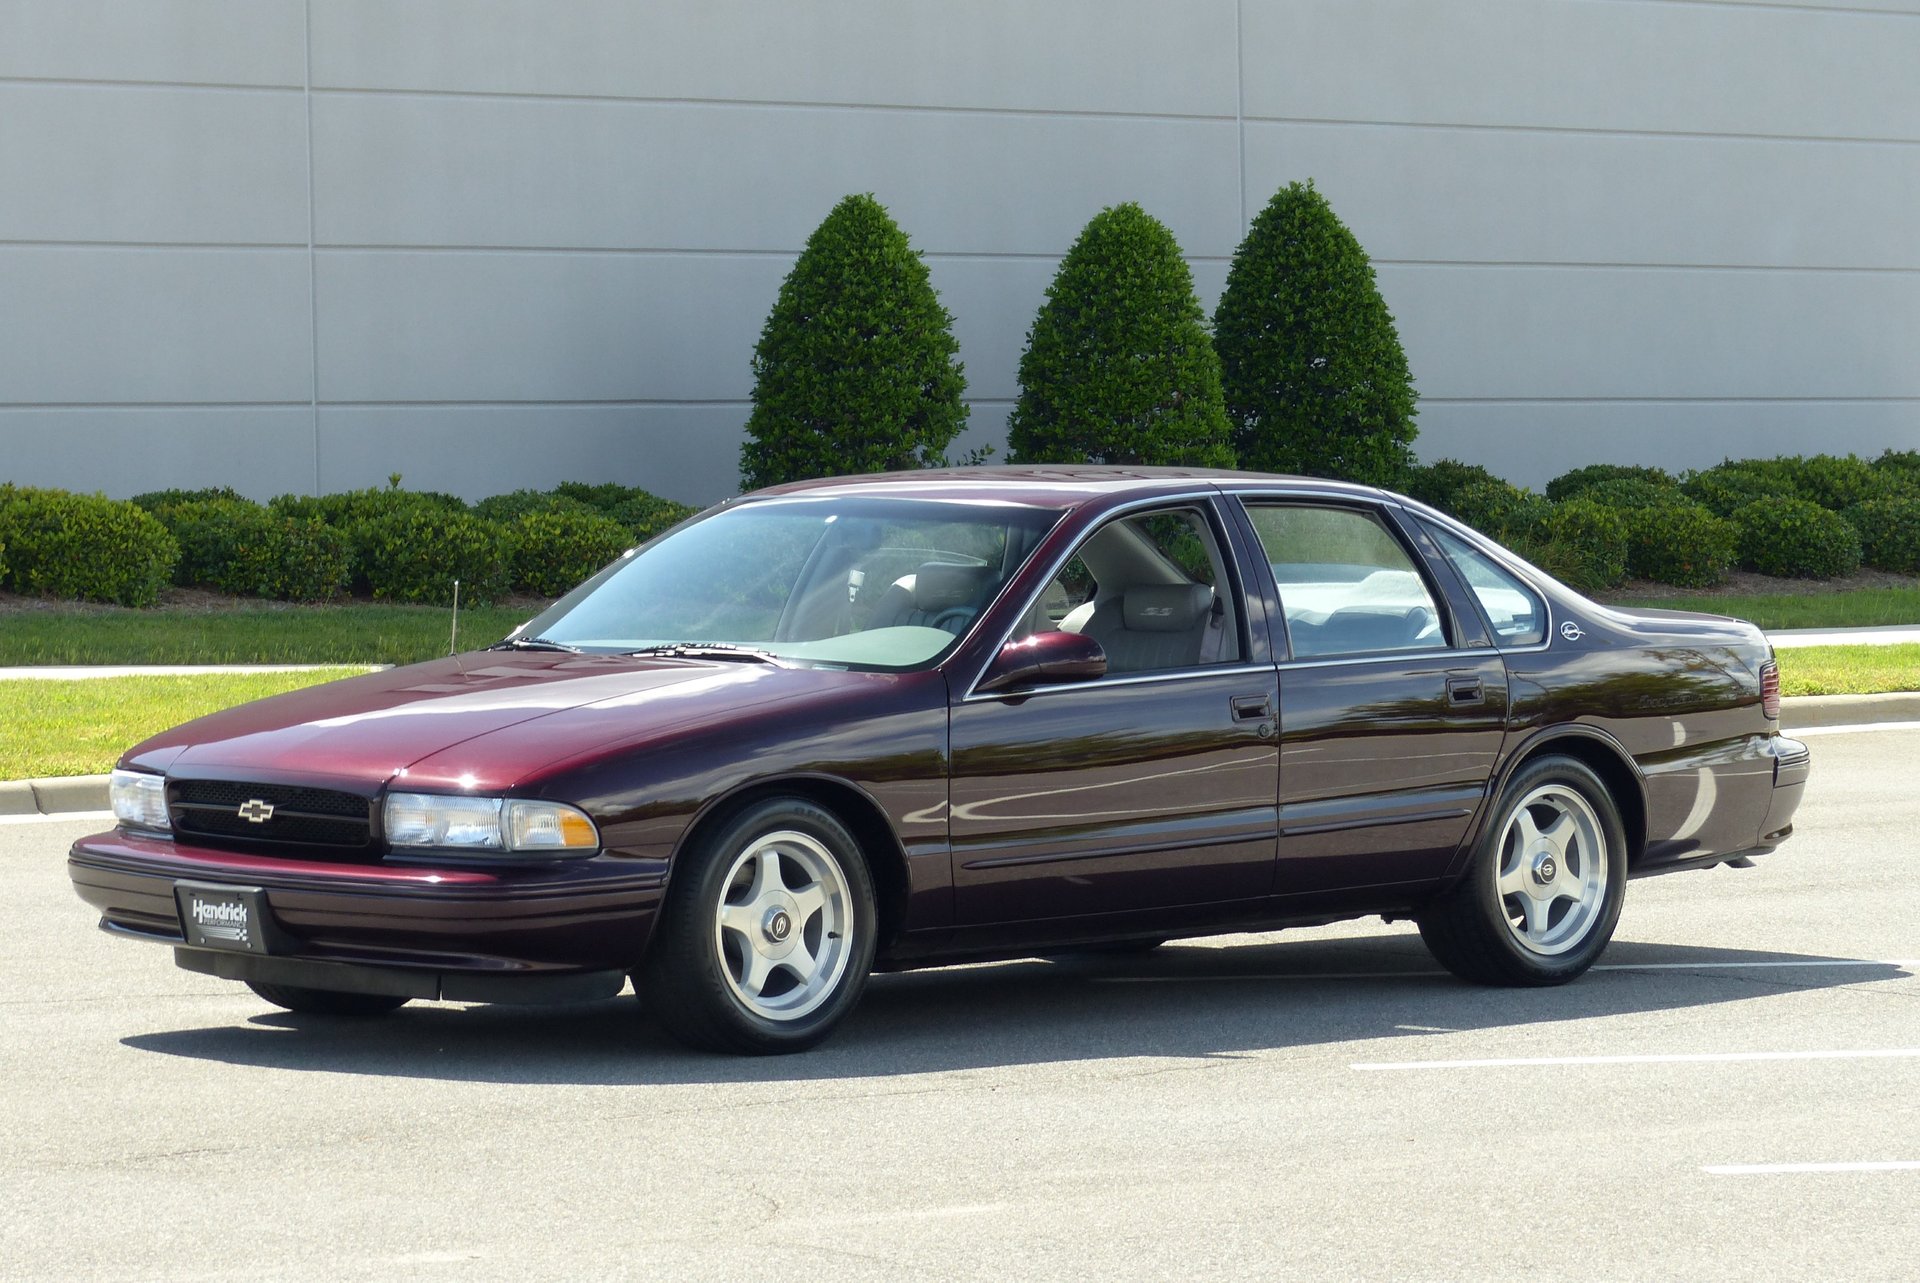 1995 Chevrolet Caprice | GAA Classic Cars